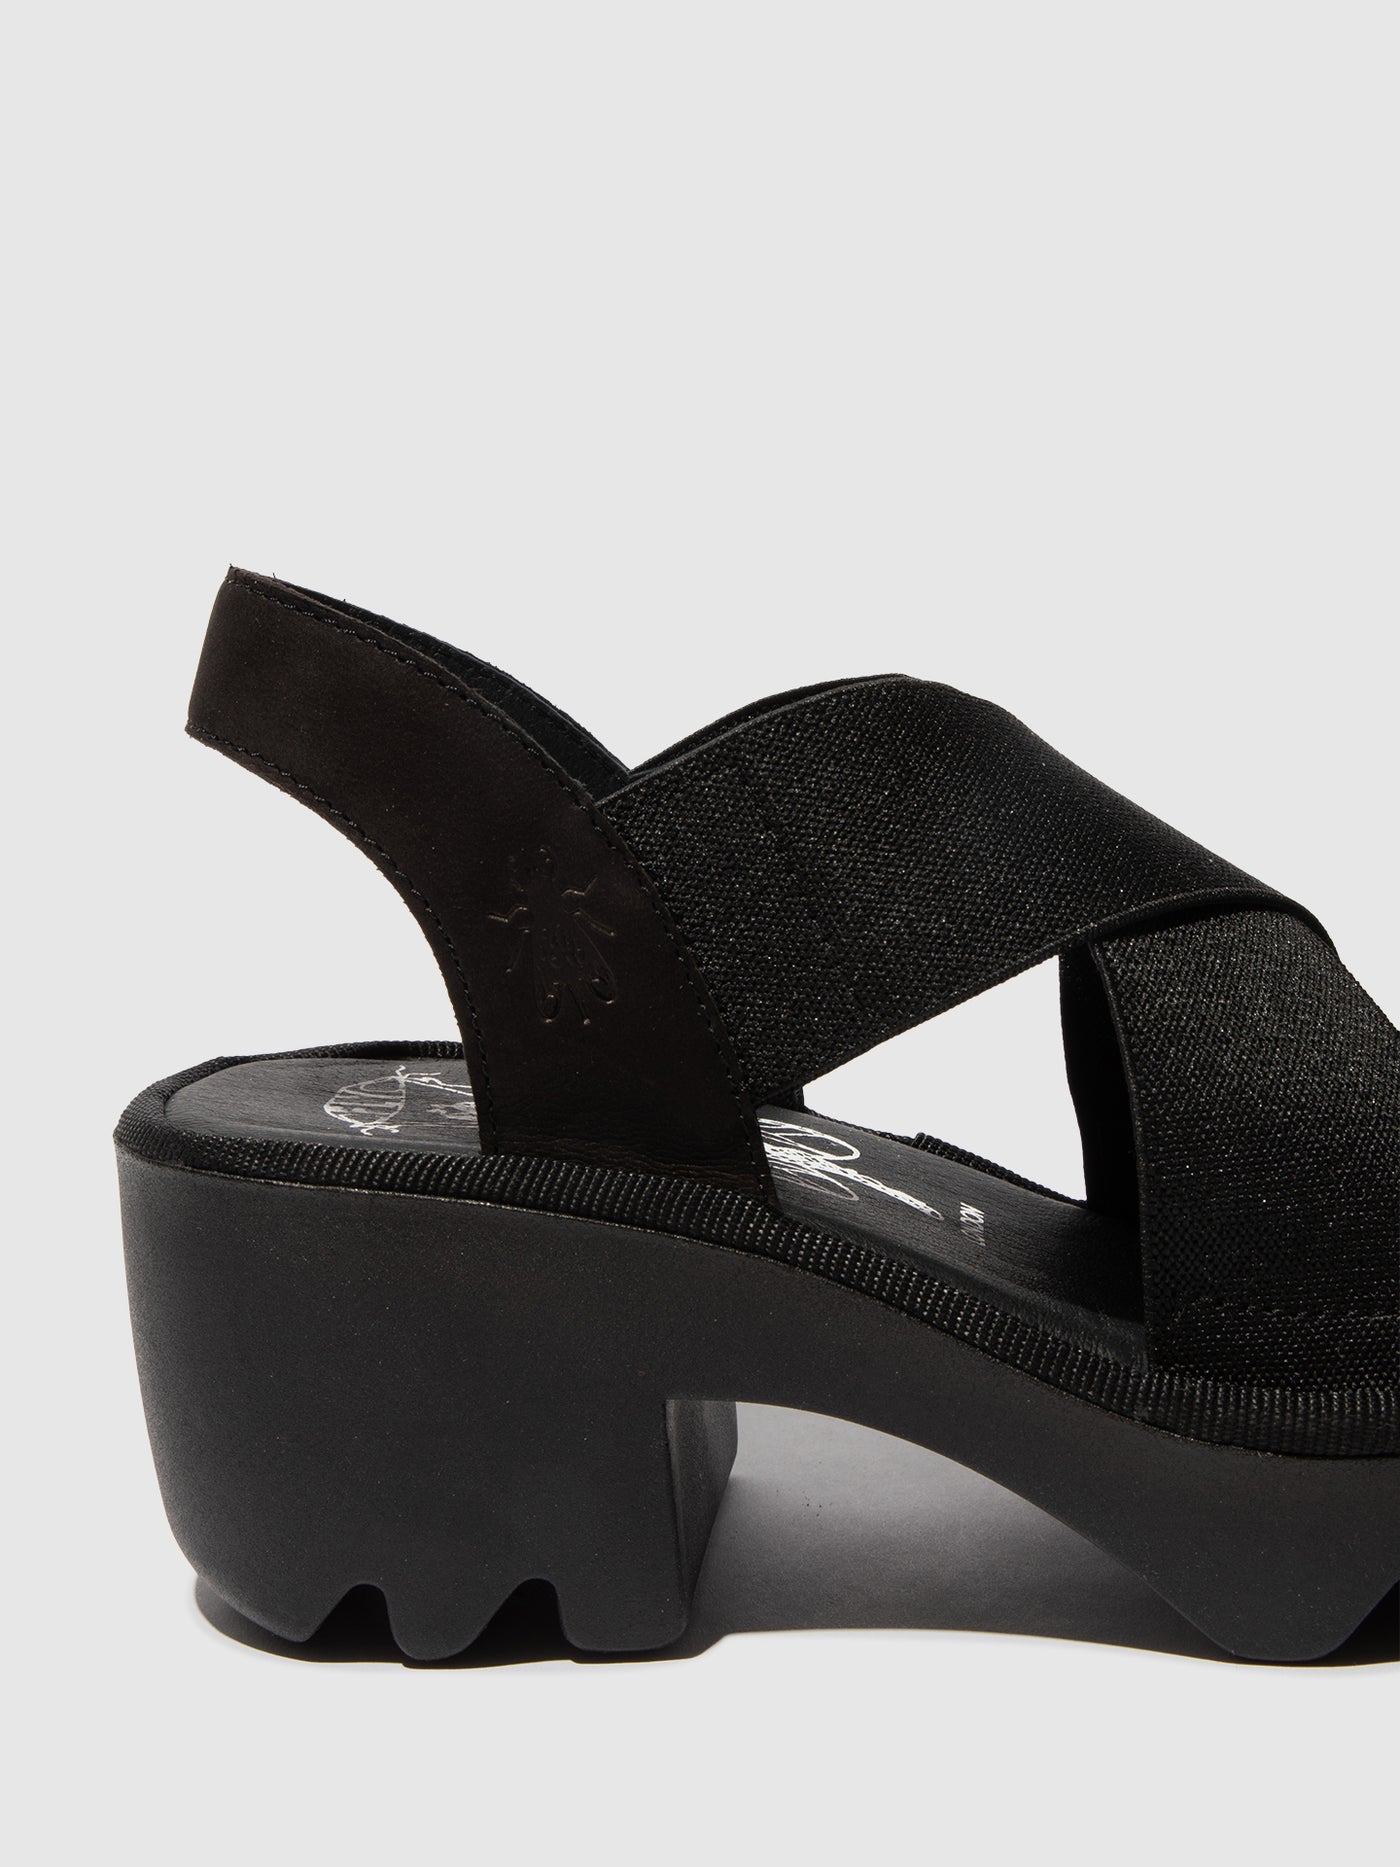 Crossover Sandals TAJI502FLY BLACK